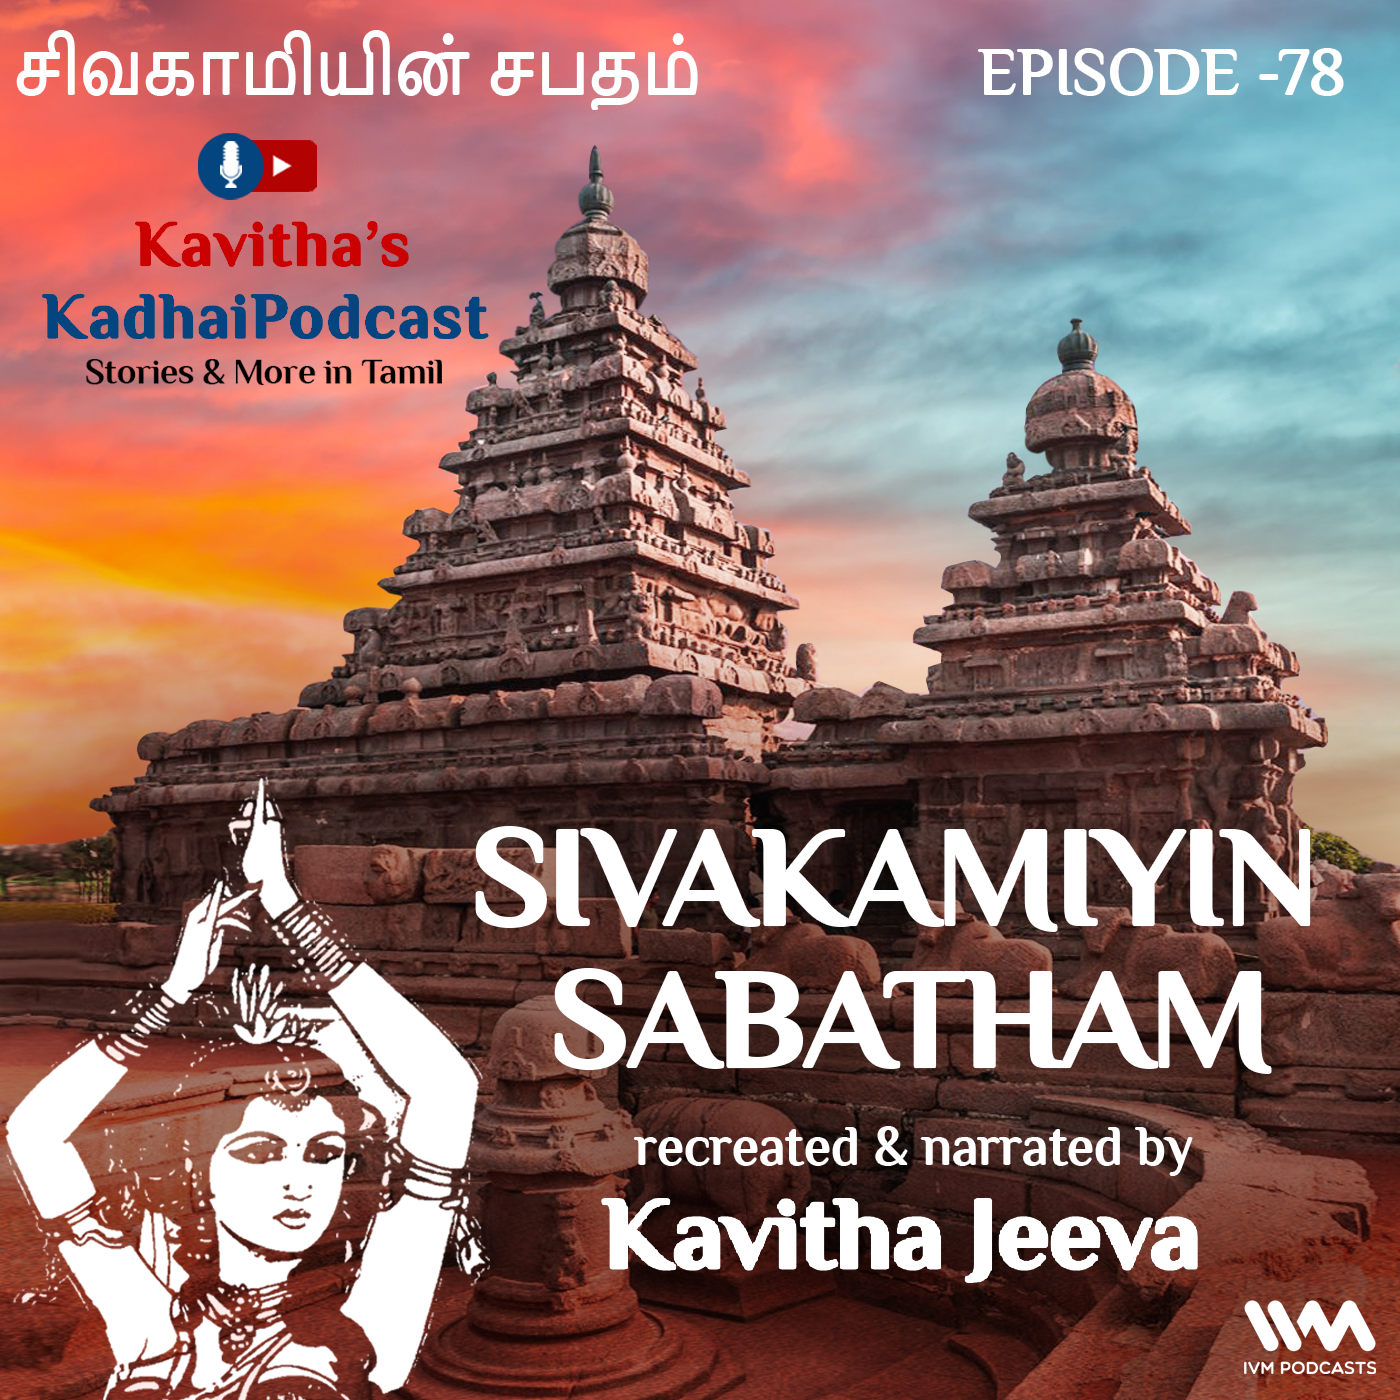 KadhaiPodcast's Sivakamiyin Sabatham - Episode # 78